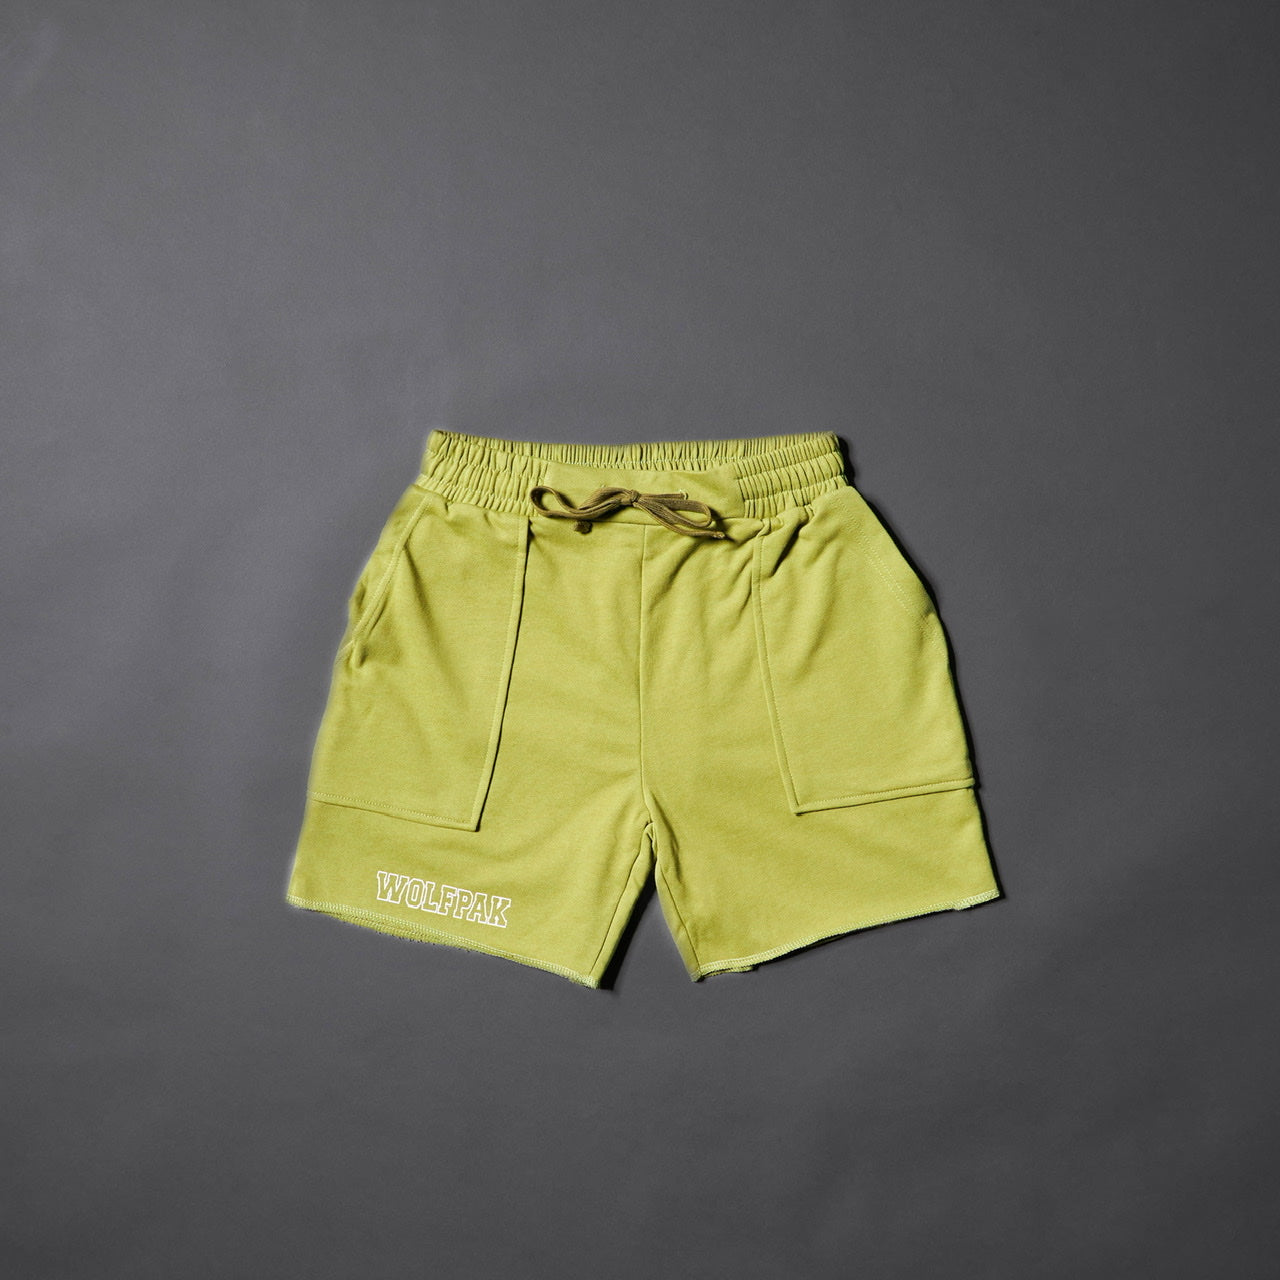 Men's Varsity Shorts Moss Green